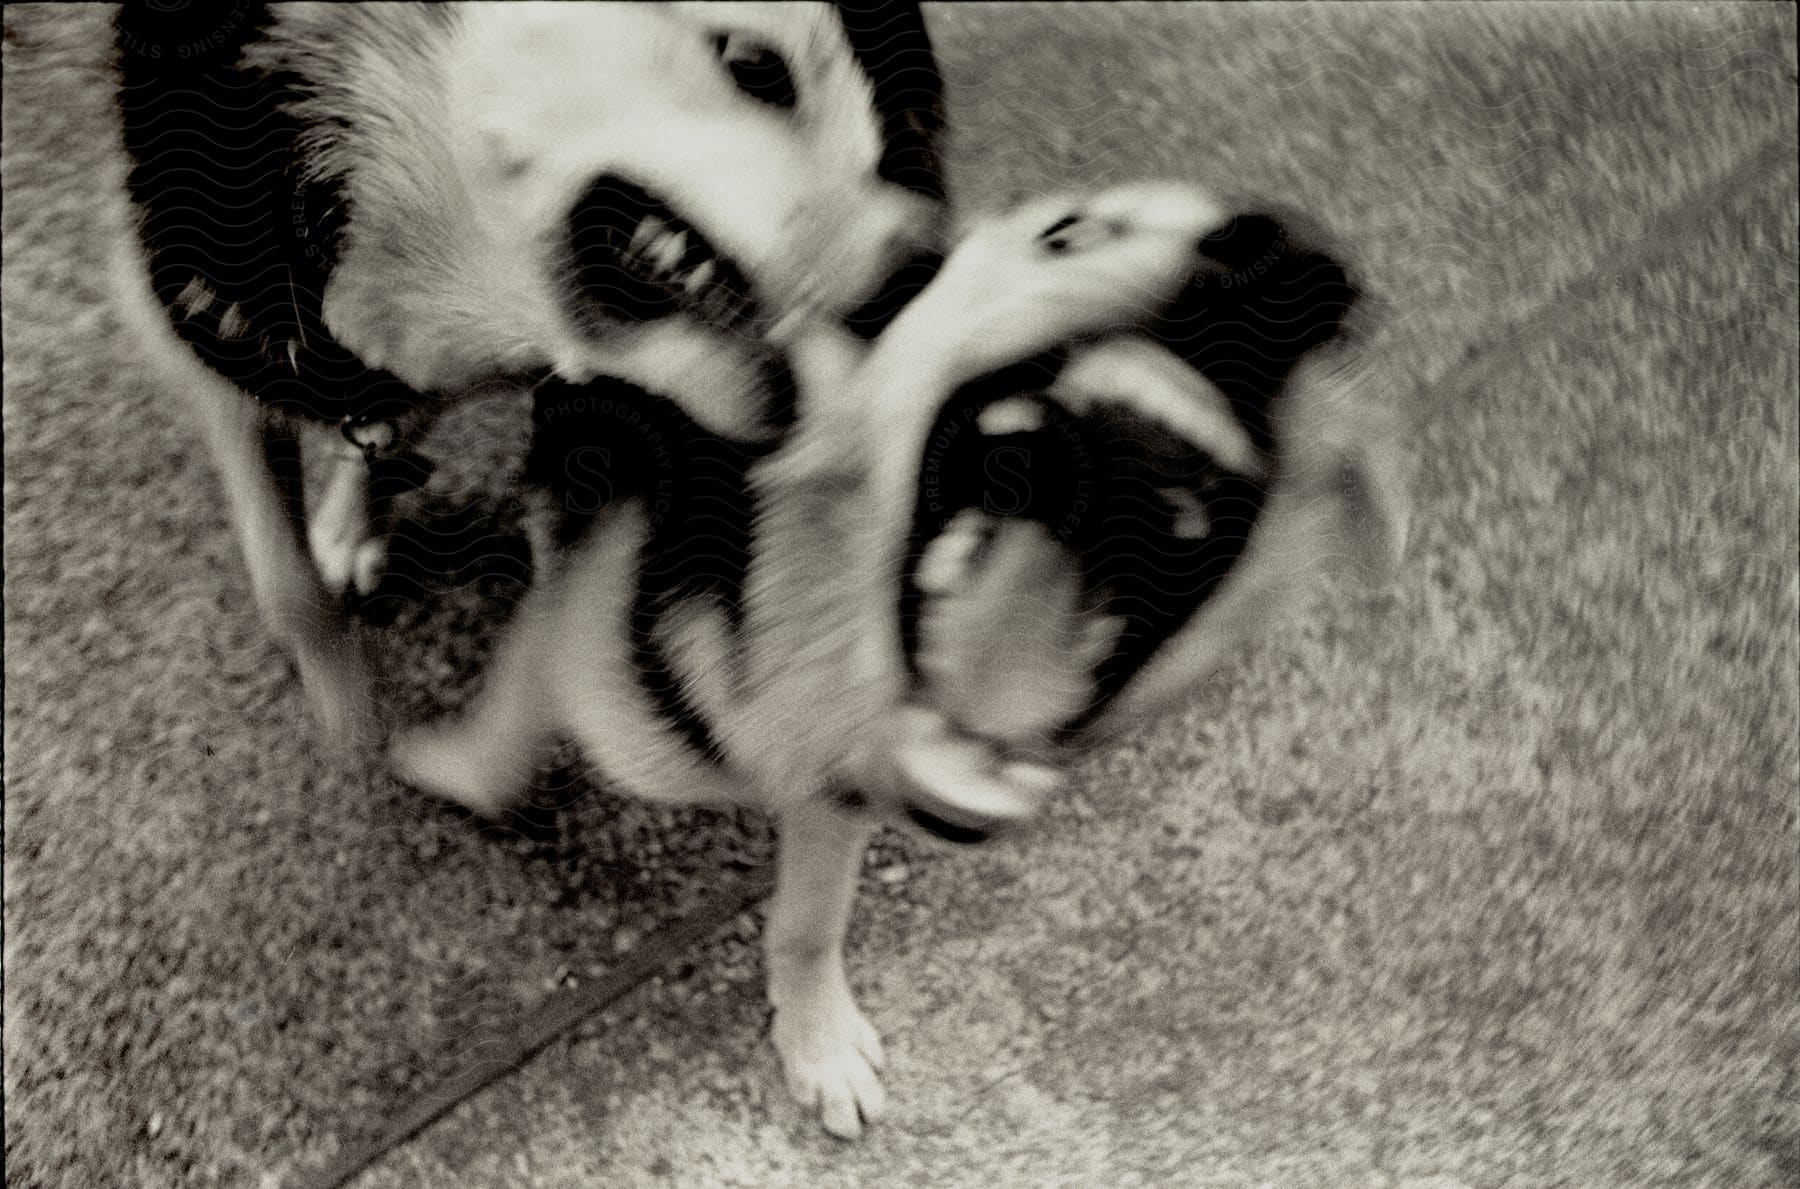 Two dogs fighting on a sidewalk outside